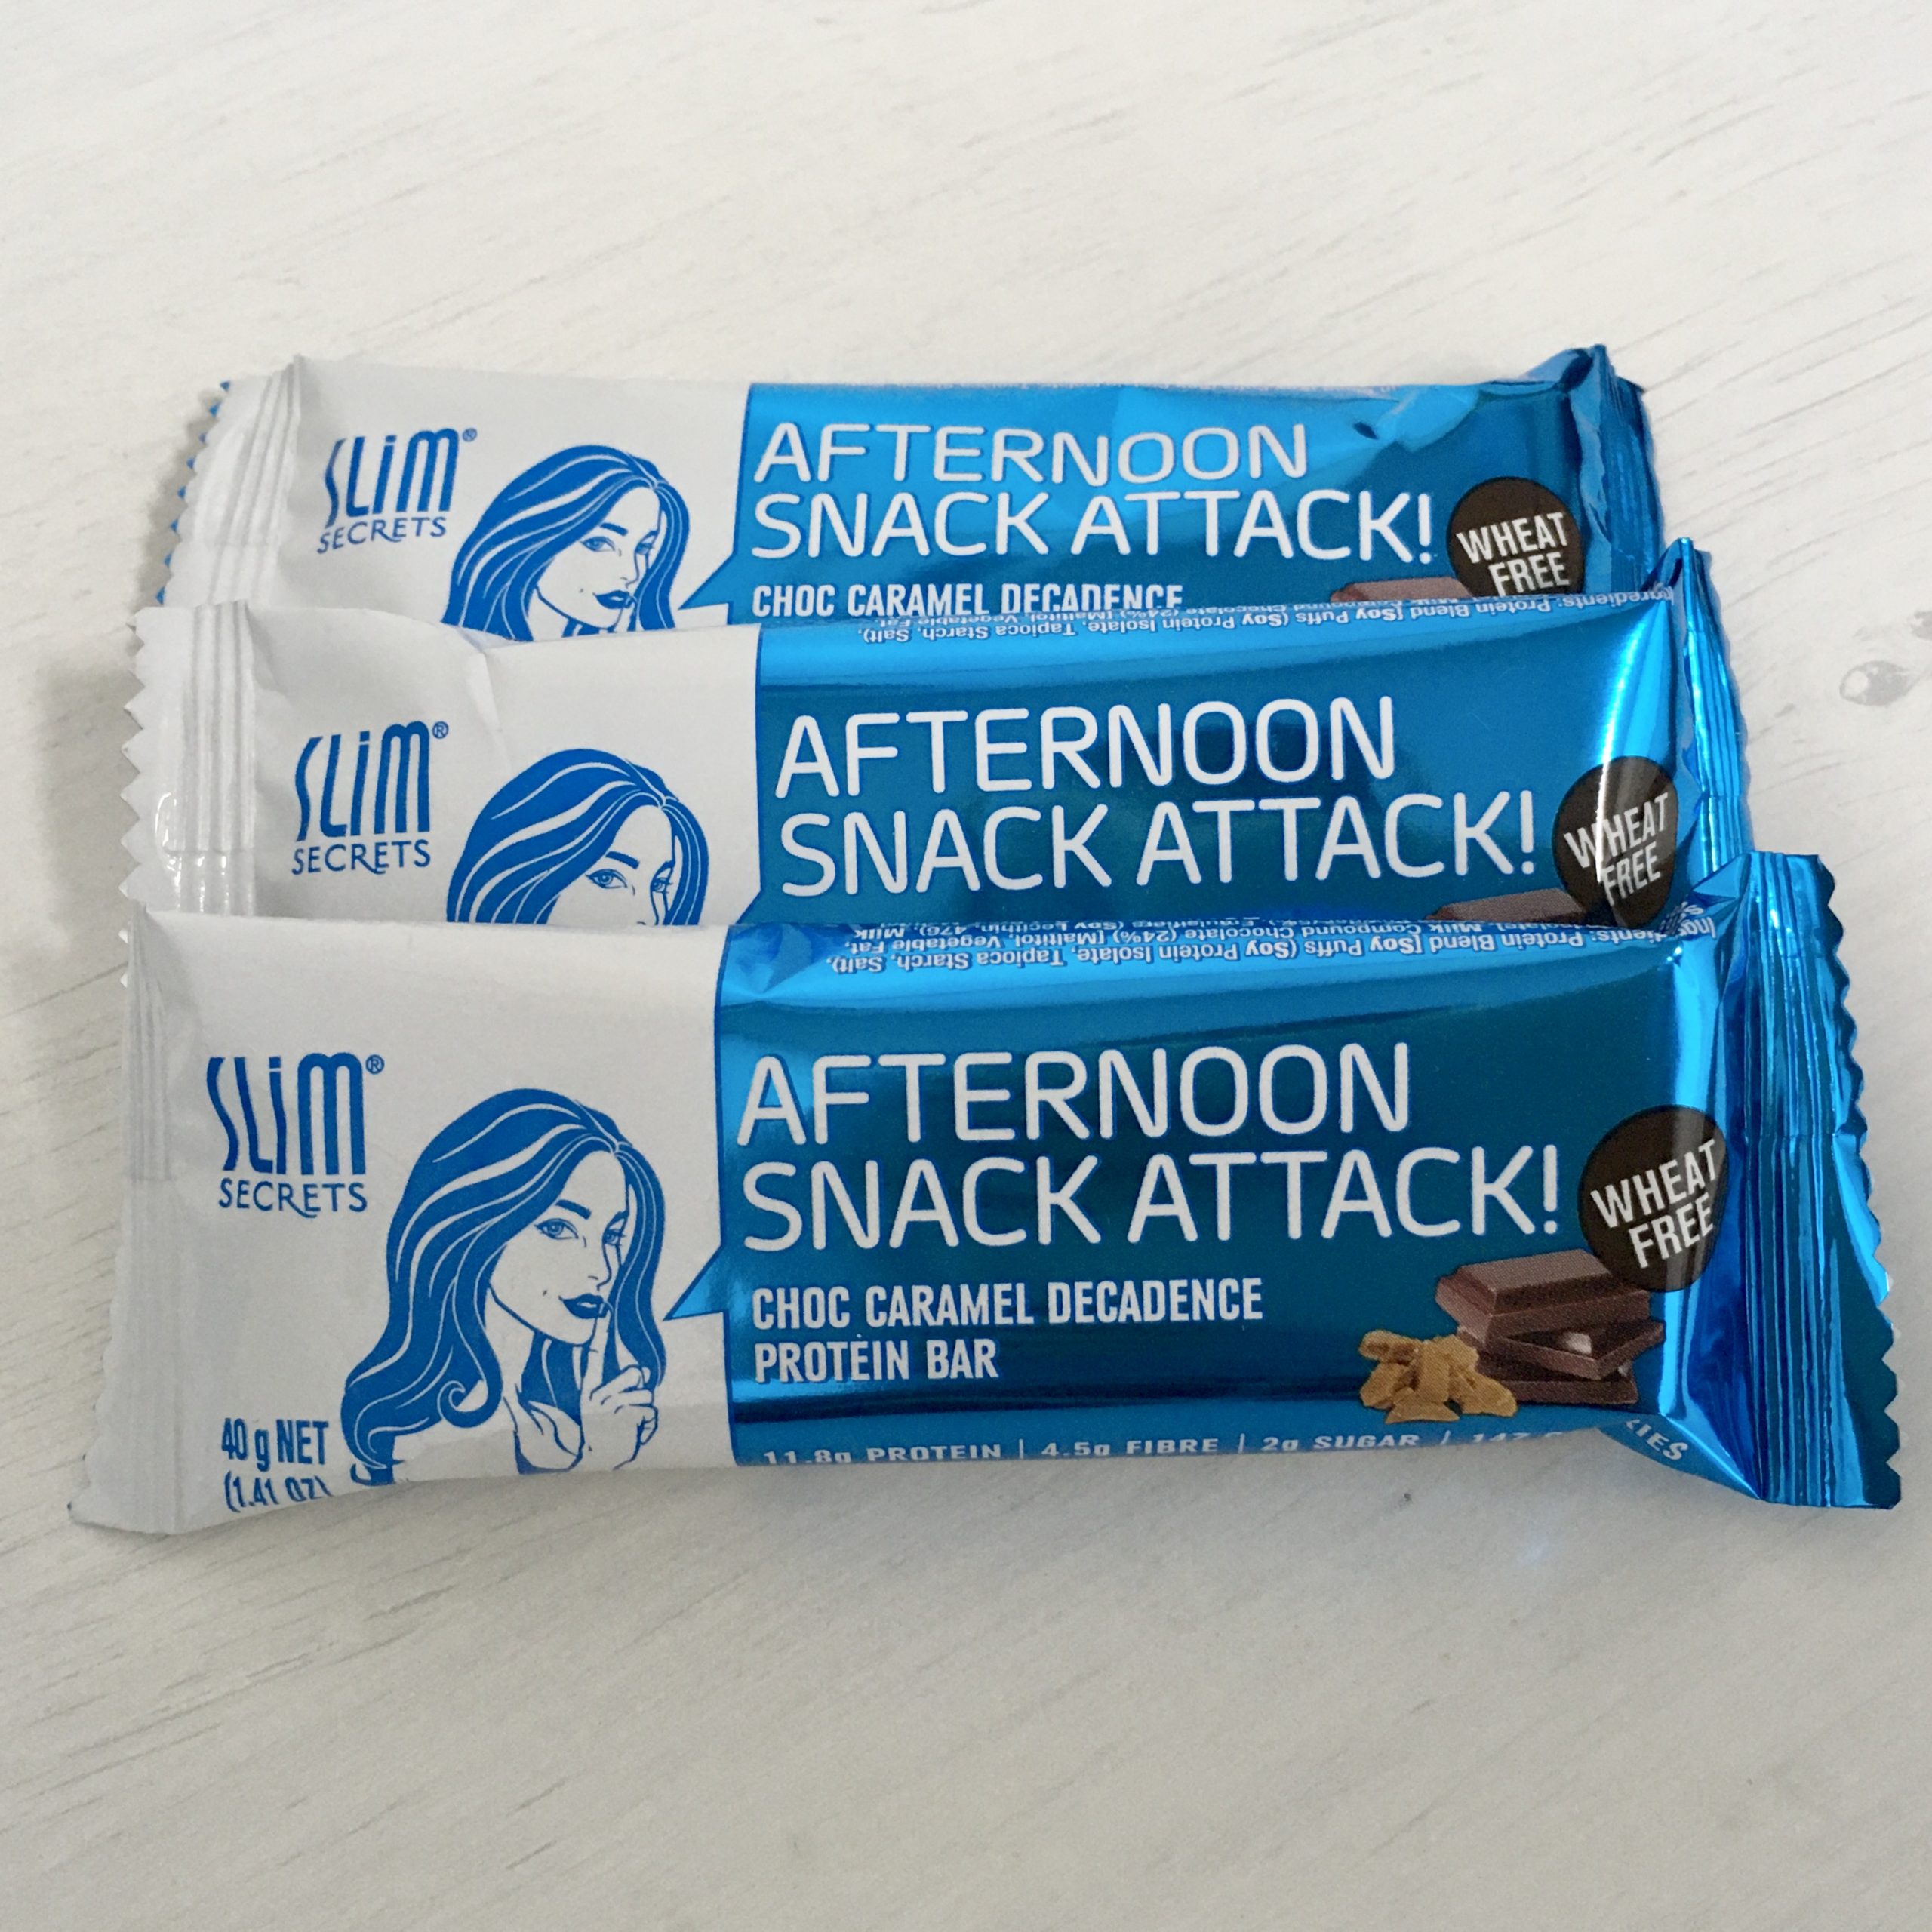 Slim Secrets Afternoon Snack Attack – Gf Cuisine